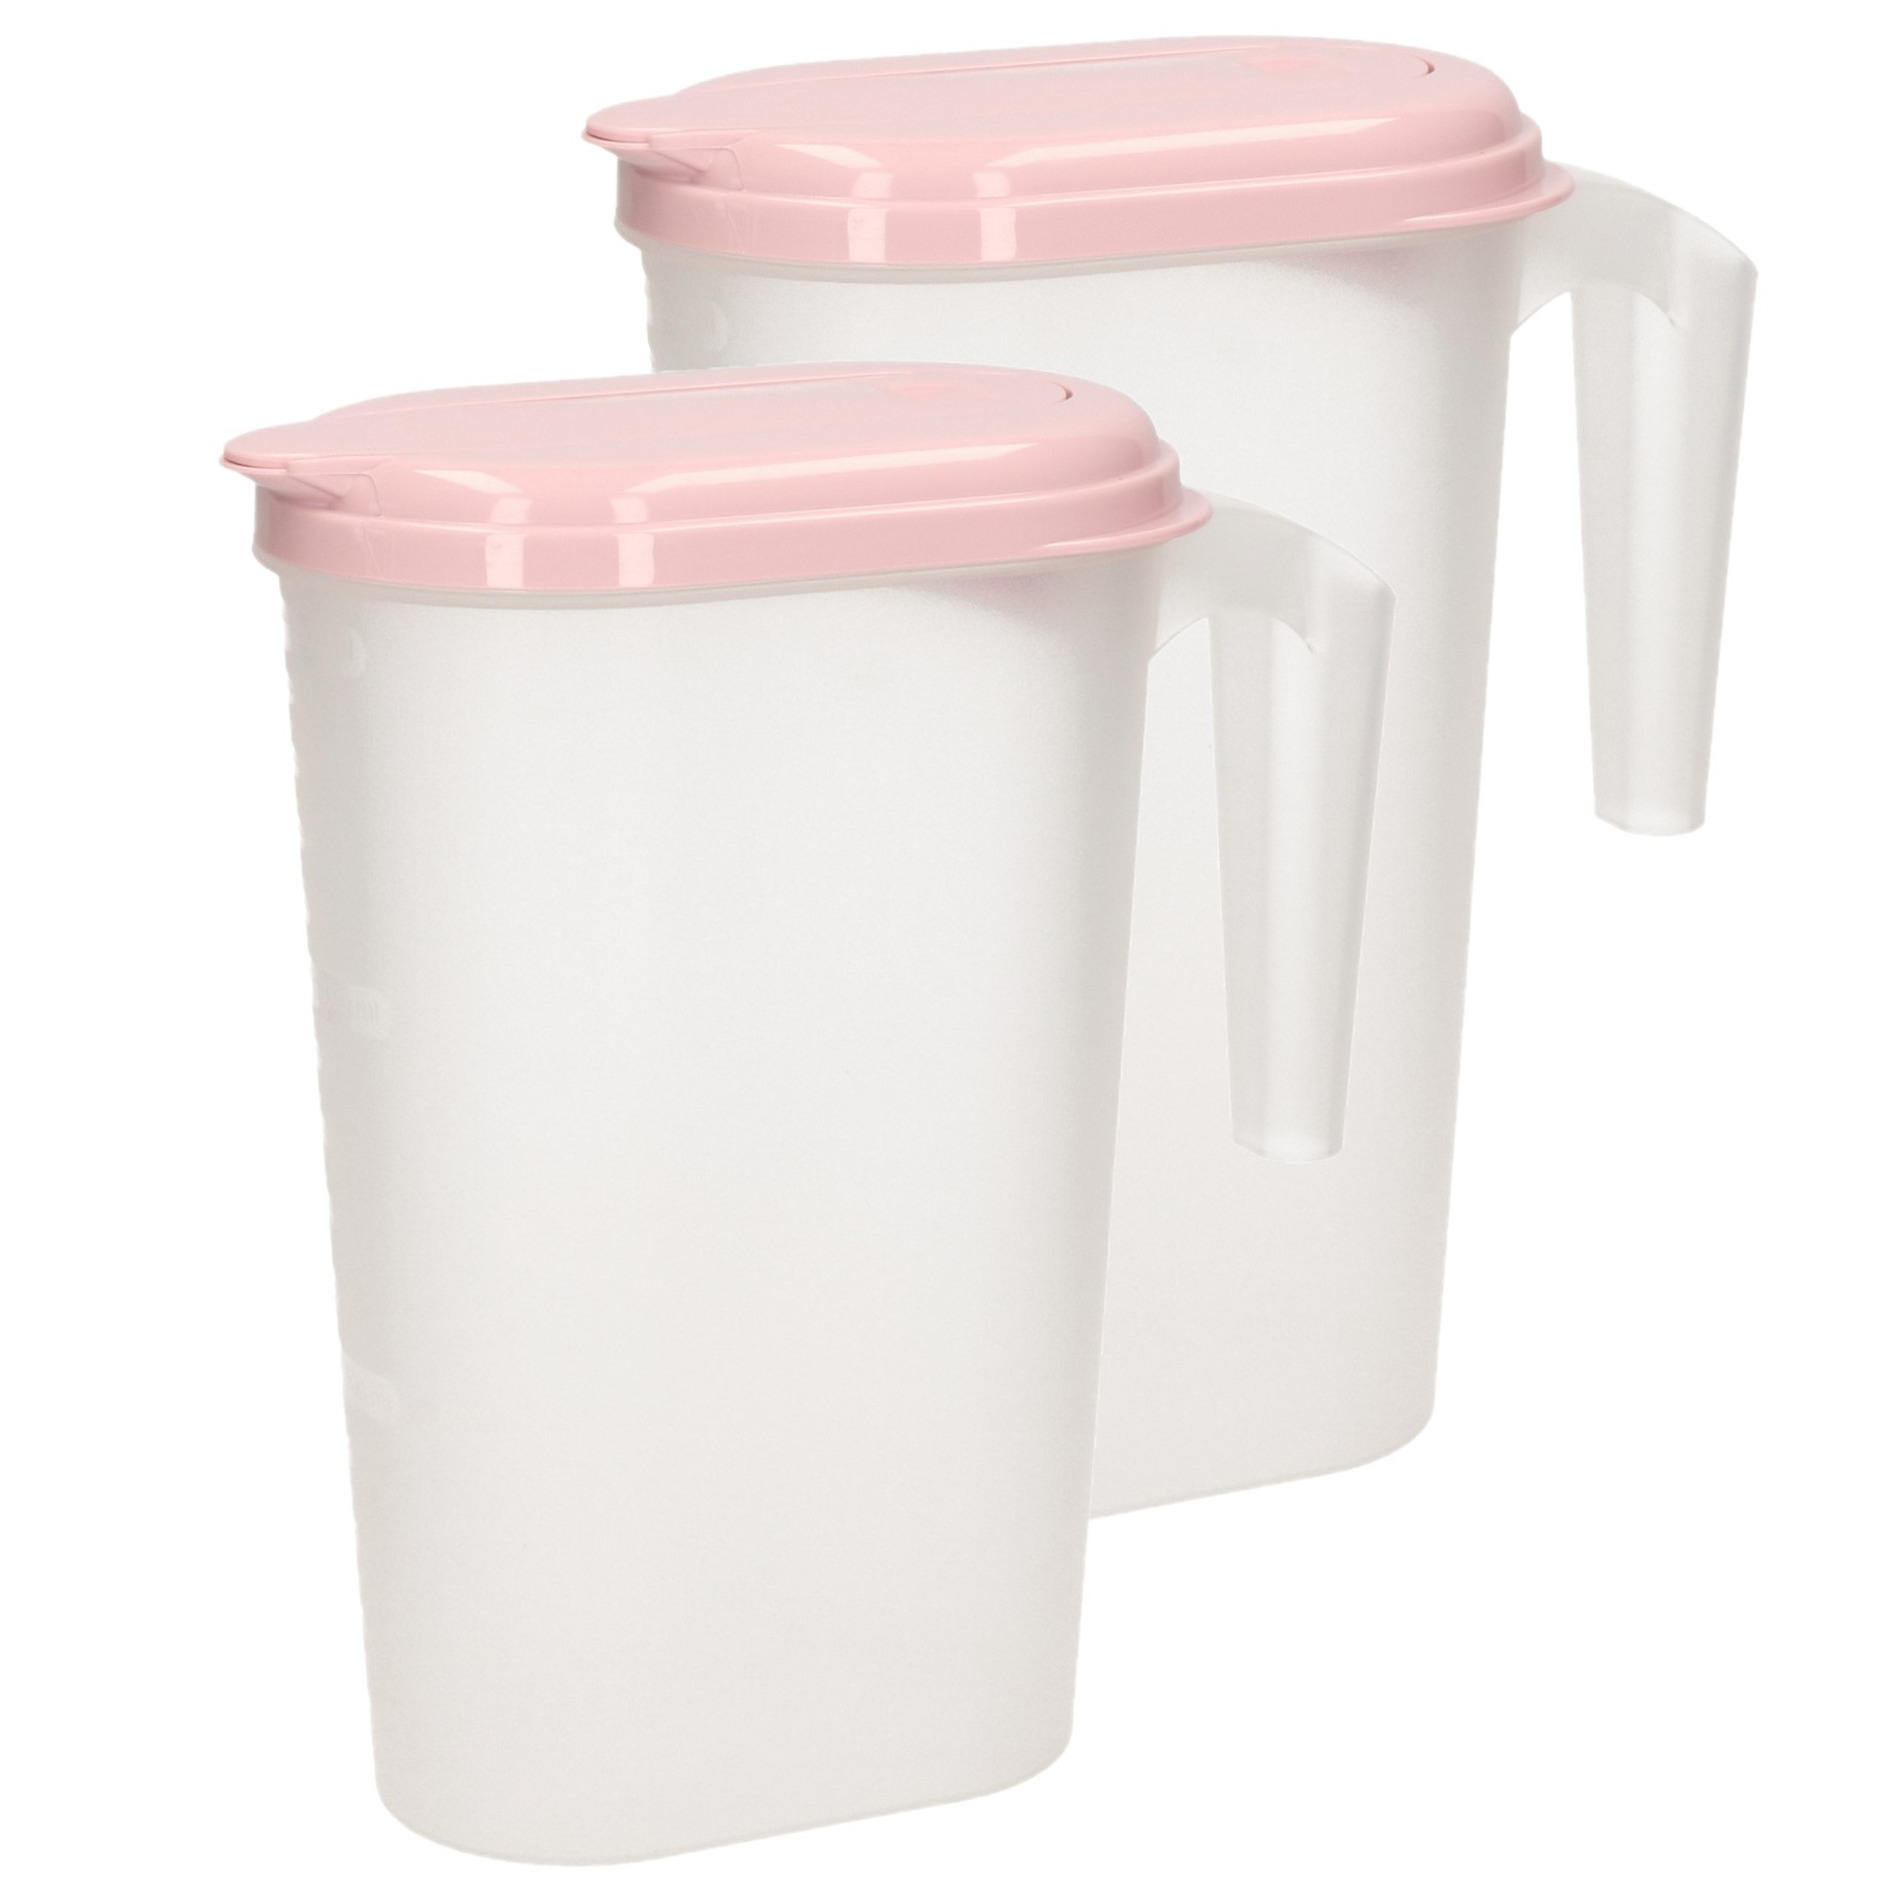 PlasticForte 2x stuks waterkan/sapkan transparant/roze met deksel 1.6 liter kunststof -